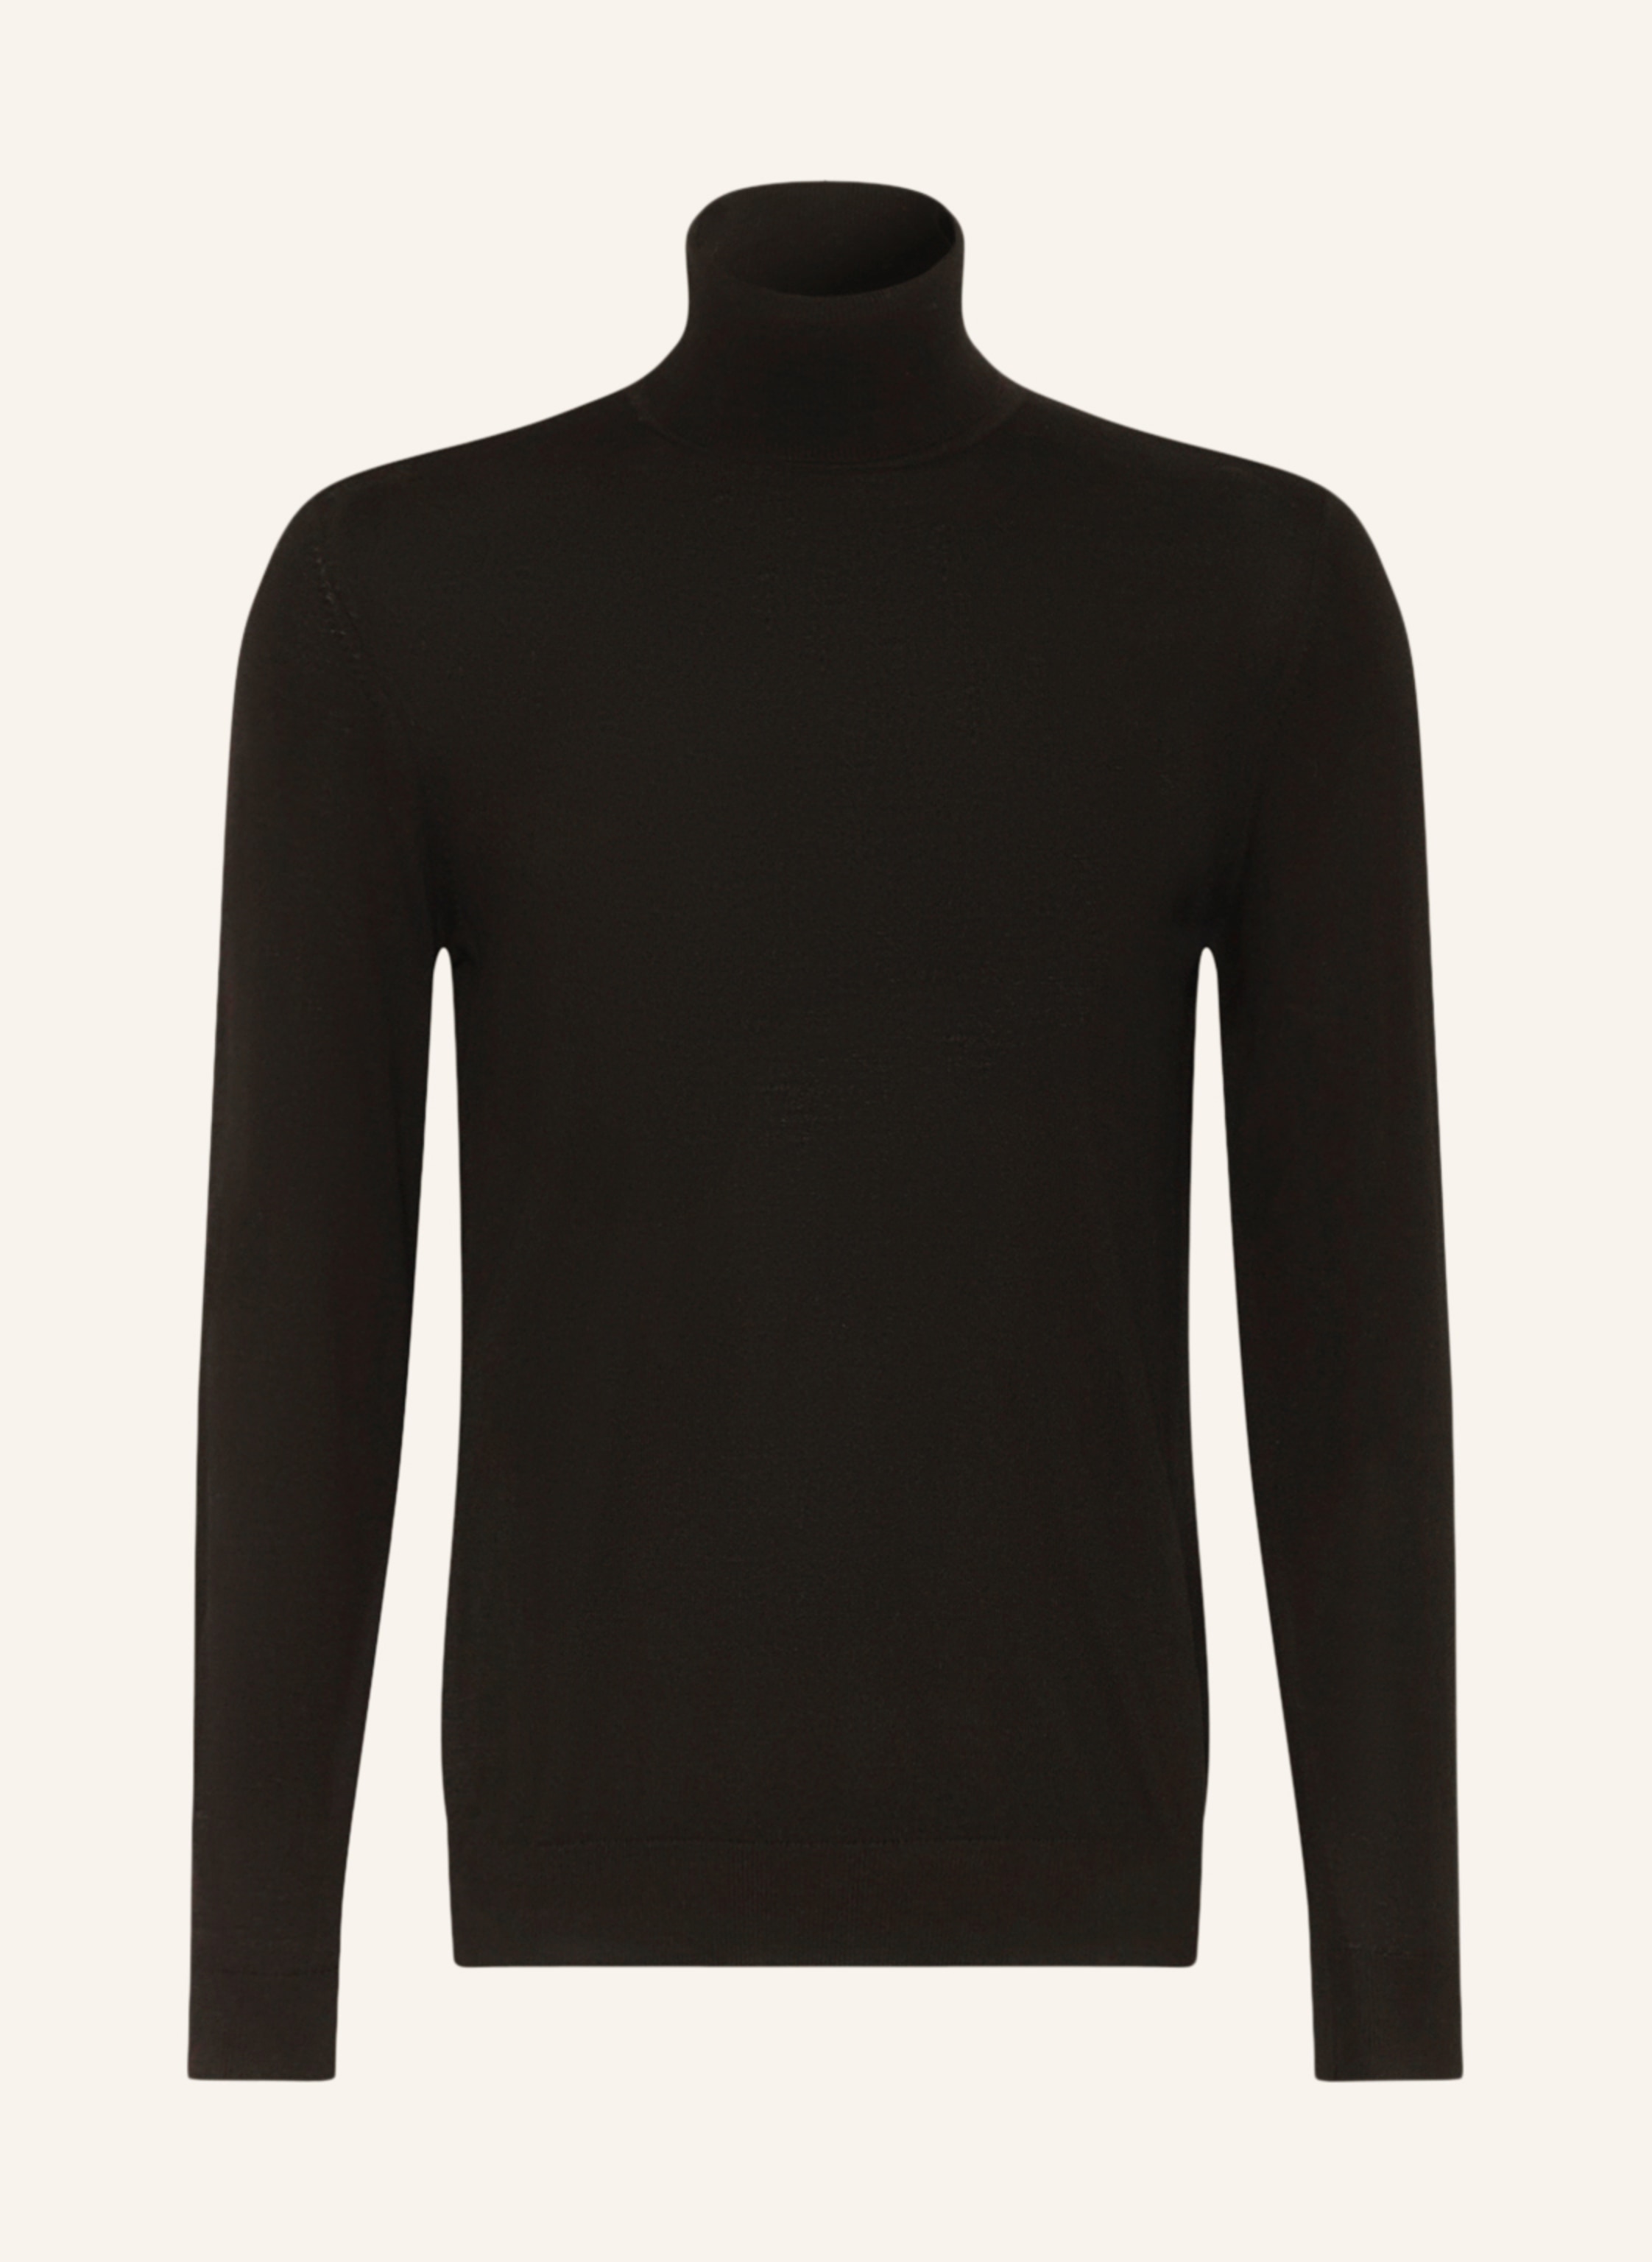 PAUL Turtleneck sweater in merino wool in black | Breuninger